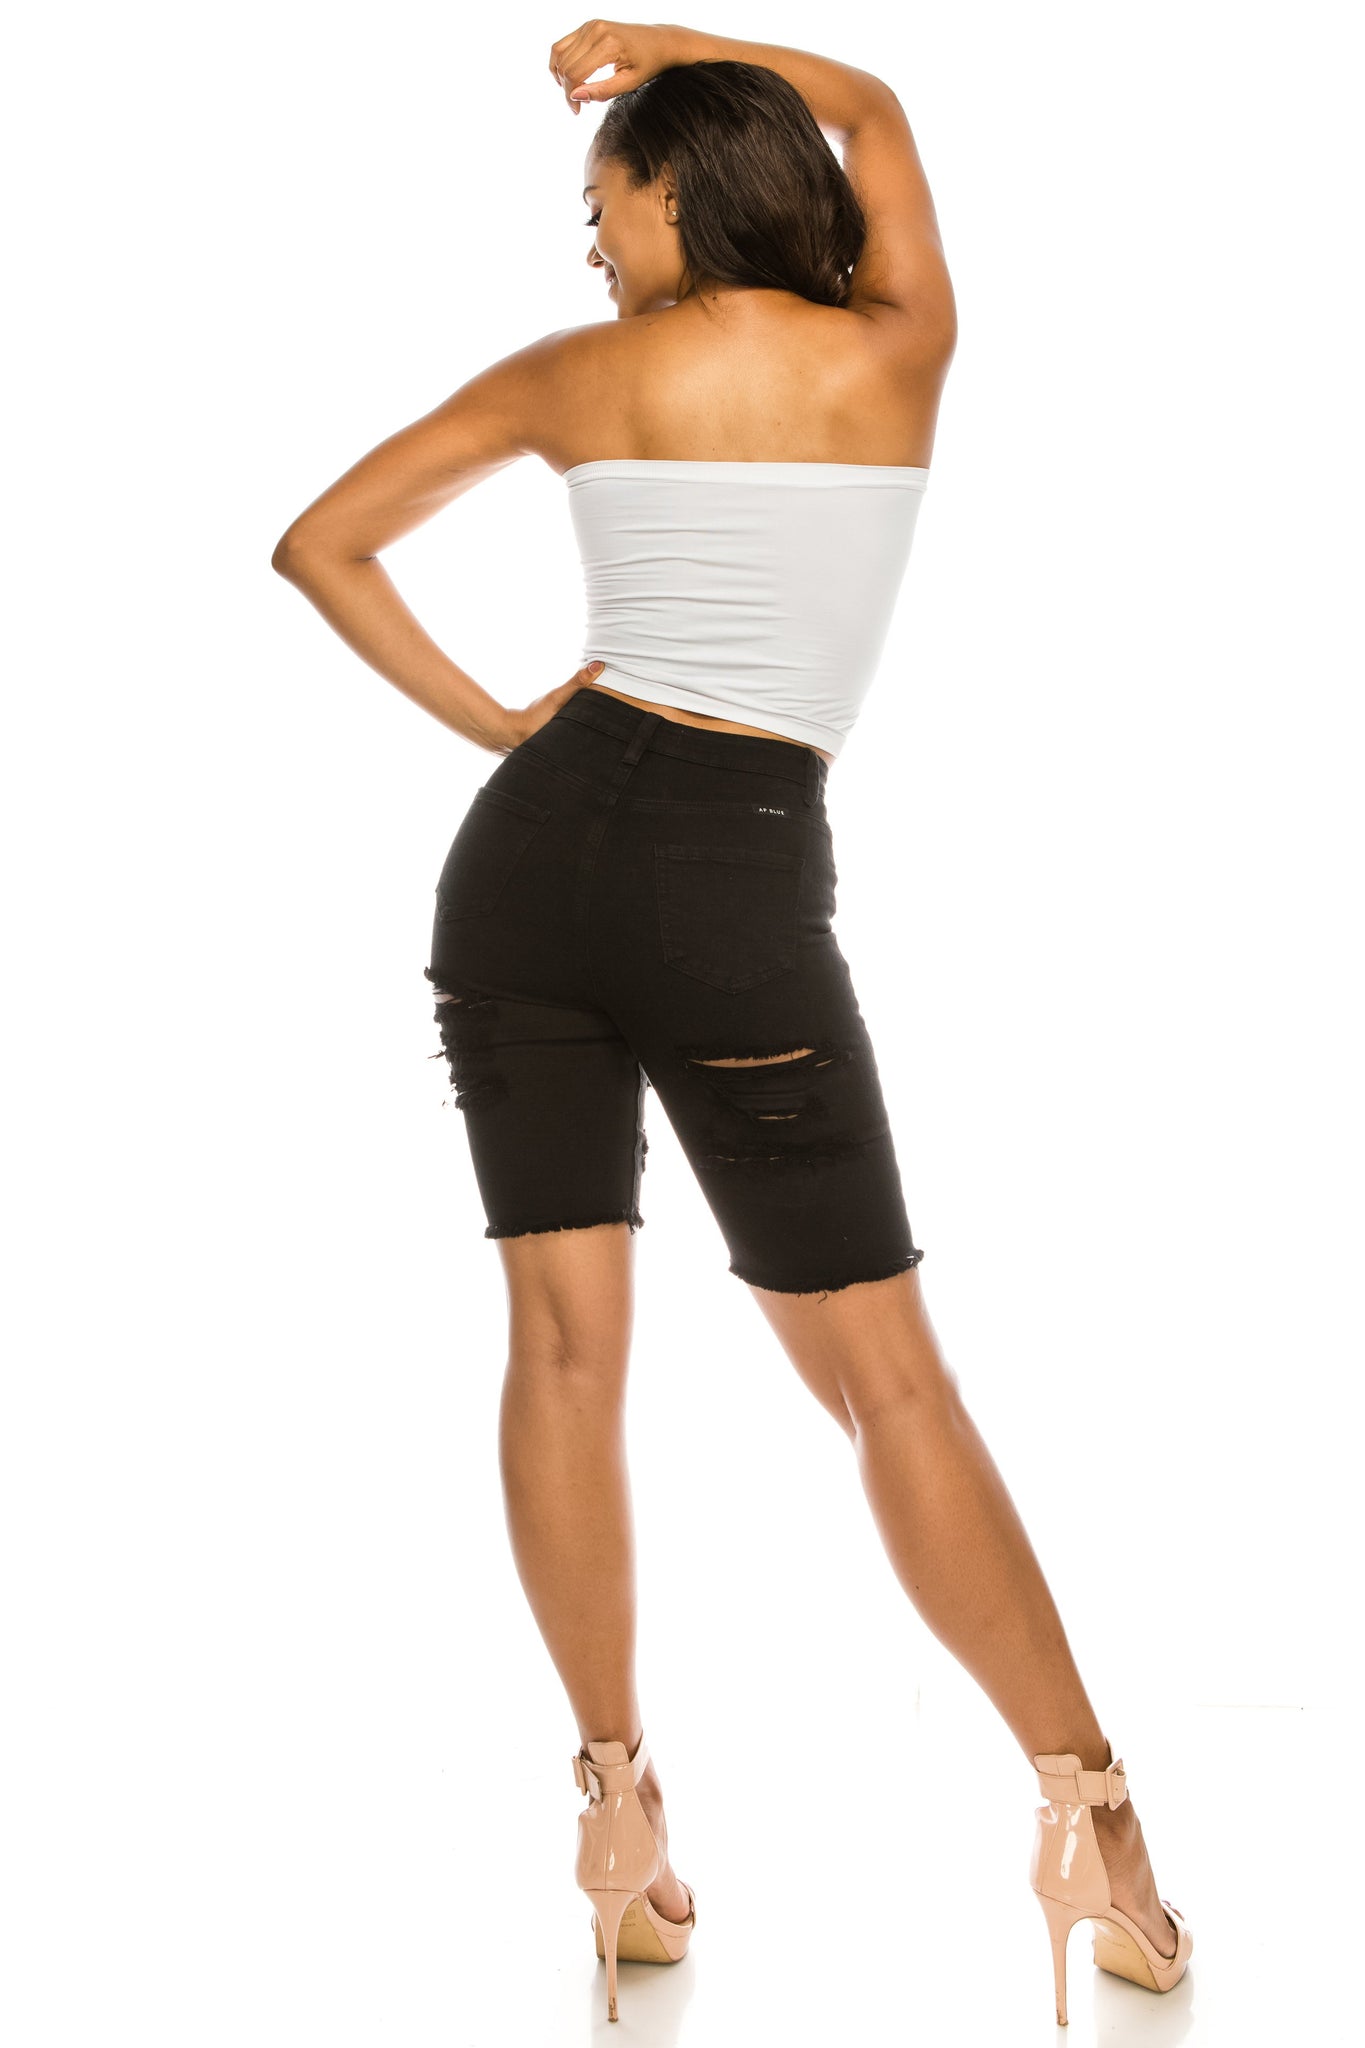 women shorts length skinny super high rise high waisted distressed bermuda shorts